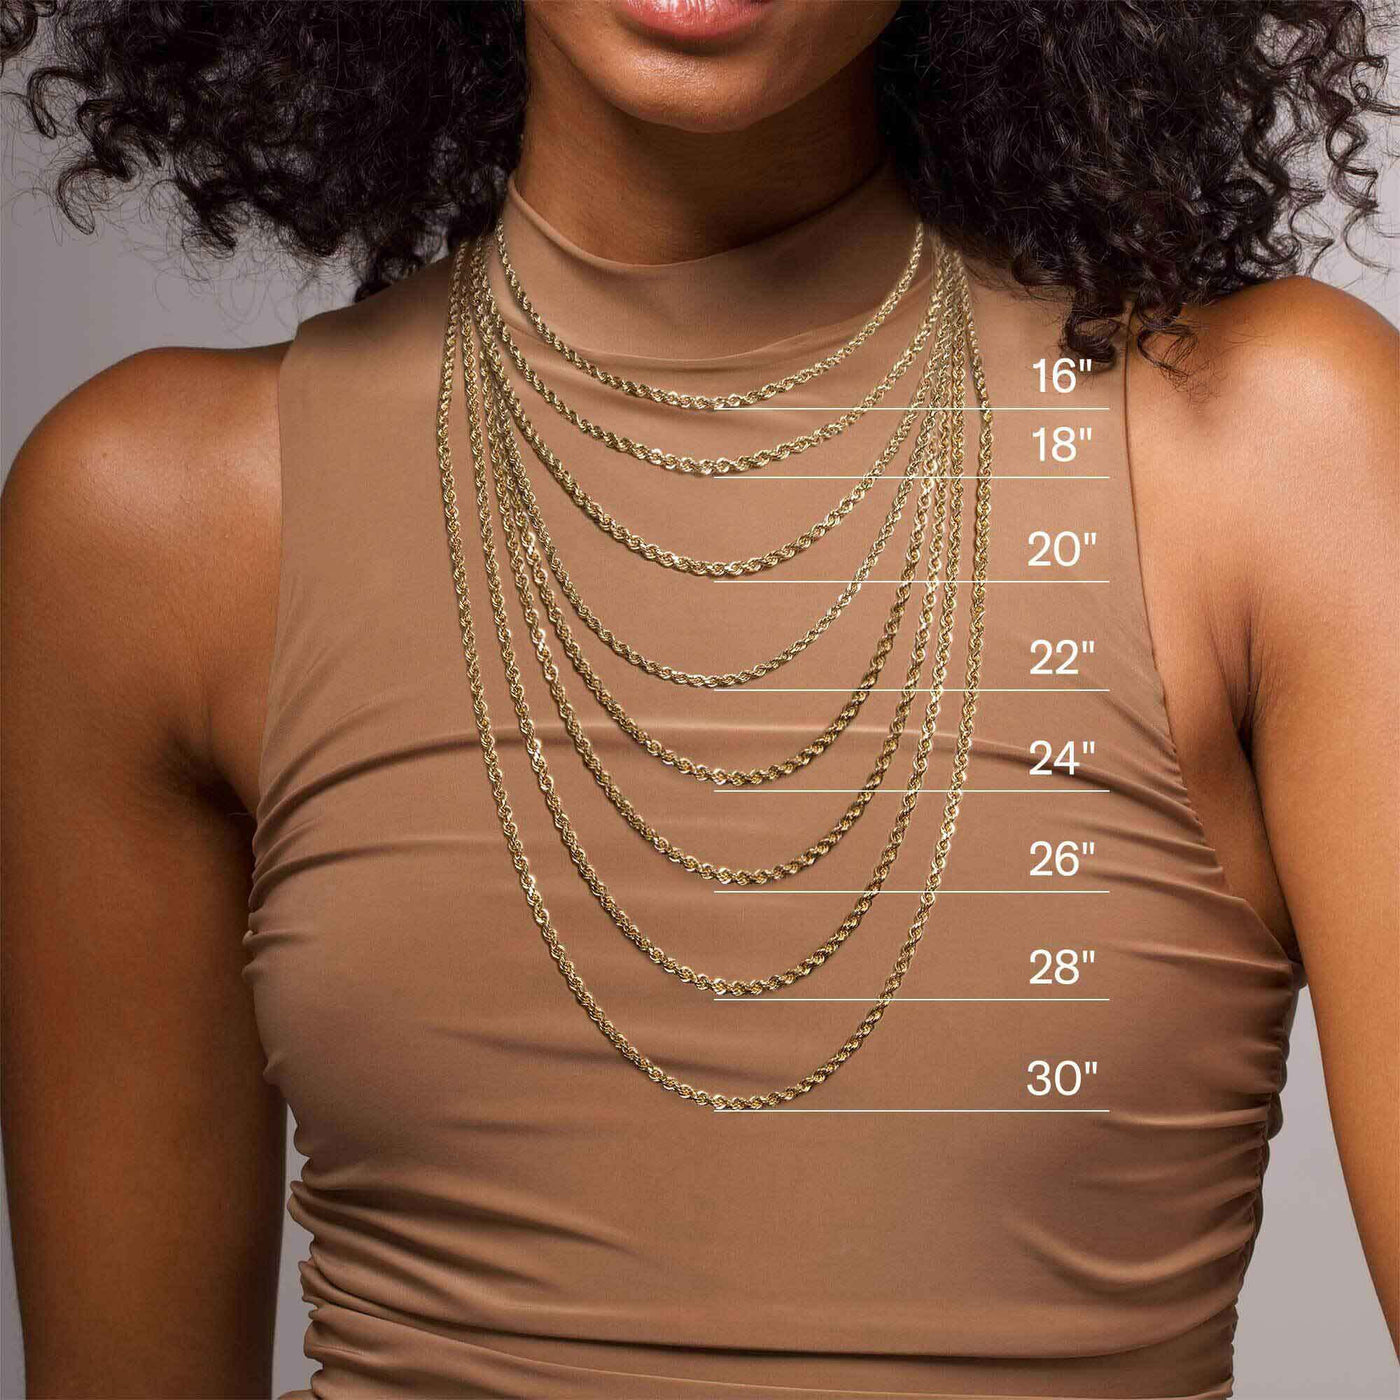 Women's Diamond Cut Valentino Link Chain Necklace 10K Tri-Color Gold